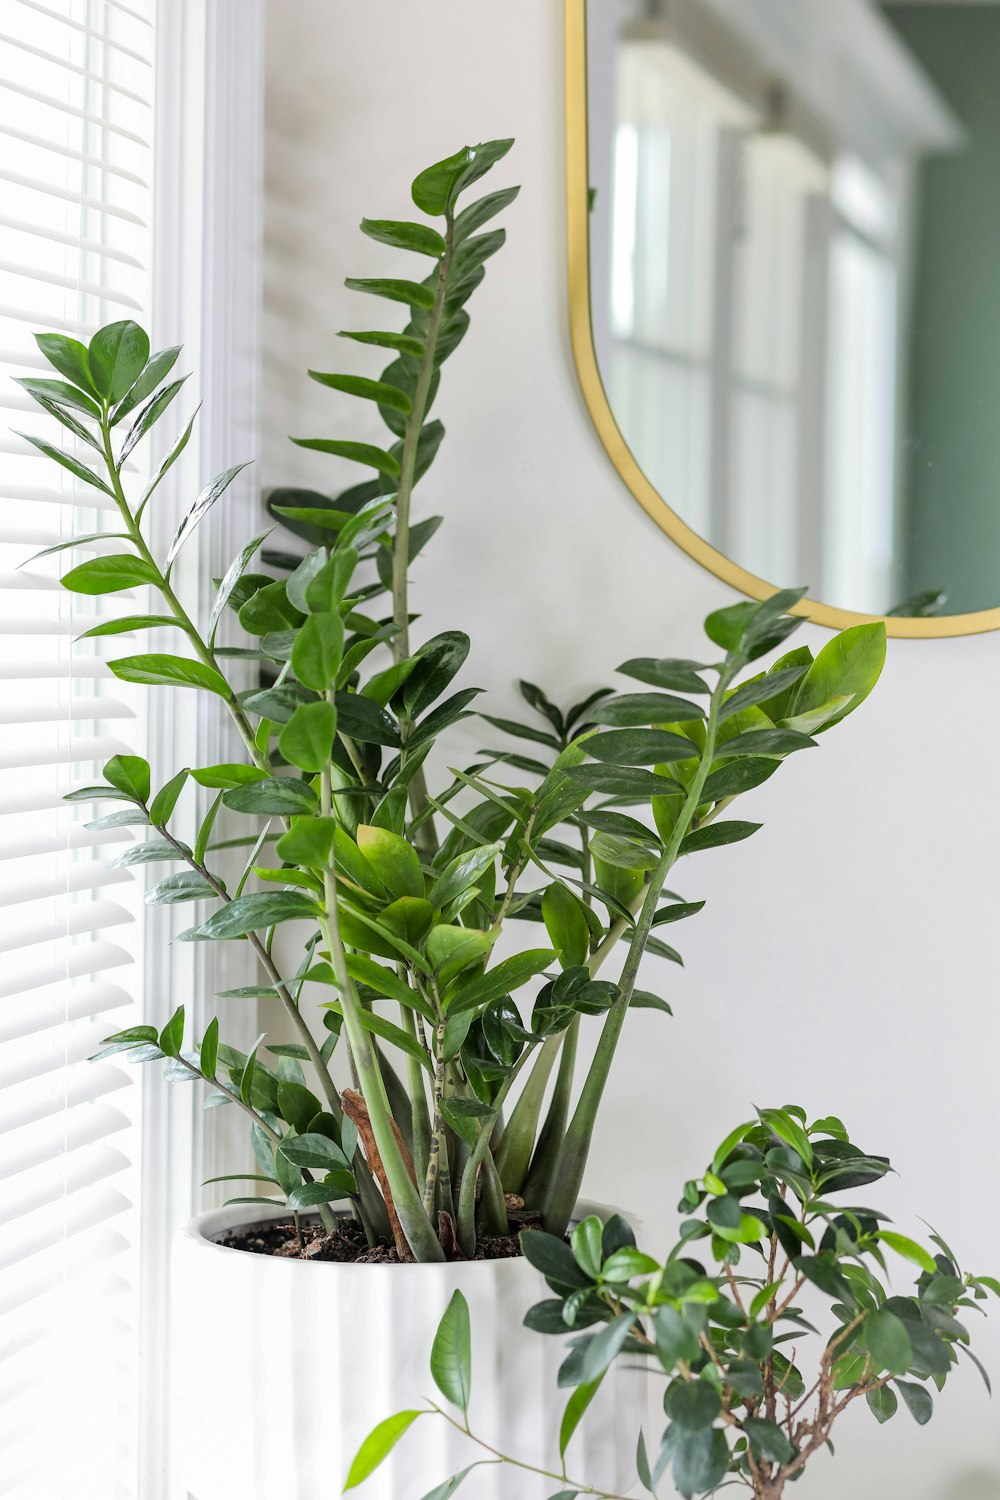 green plant near white window blinds